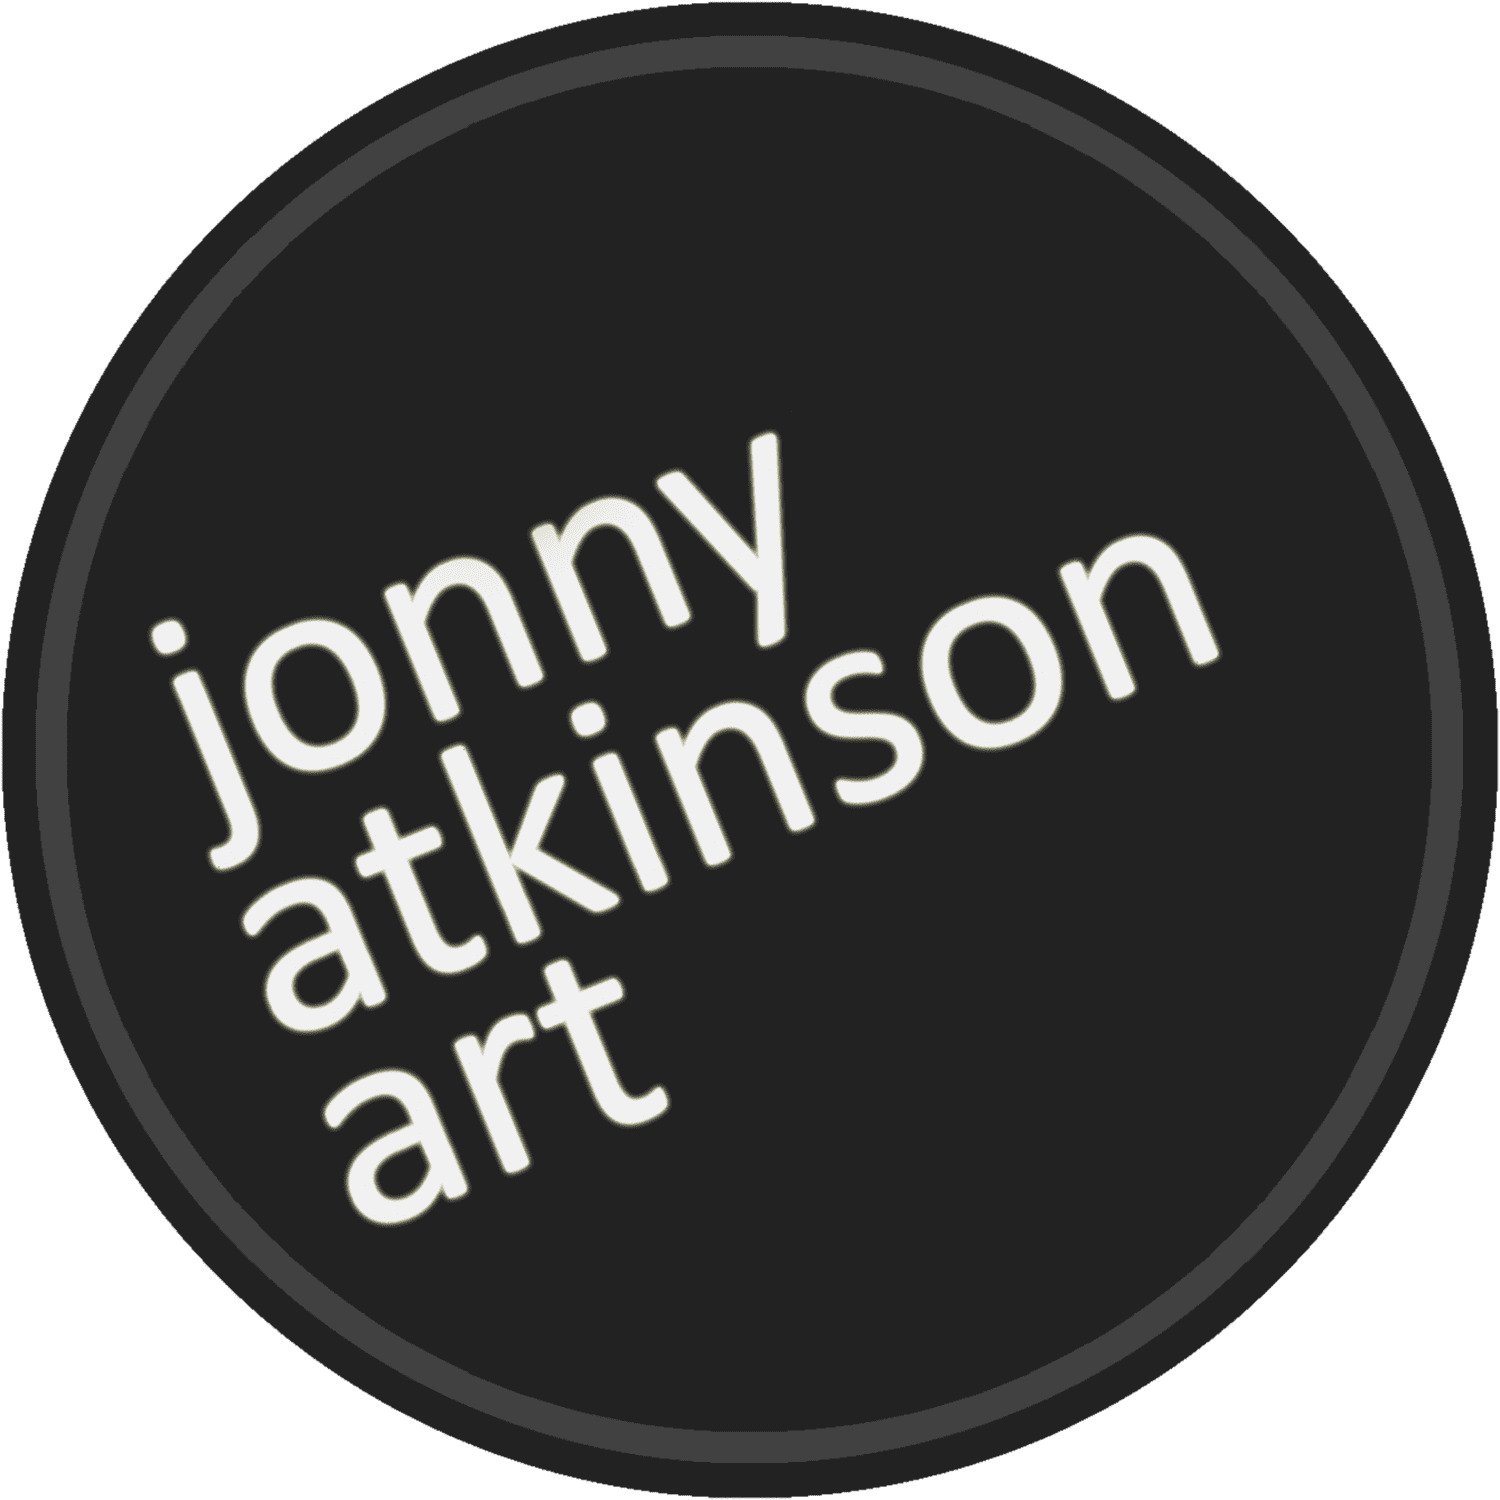 Jonny Atkinson Art